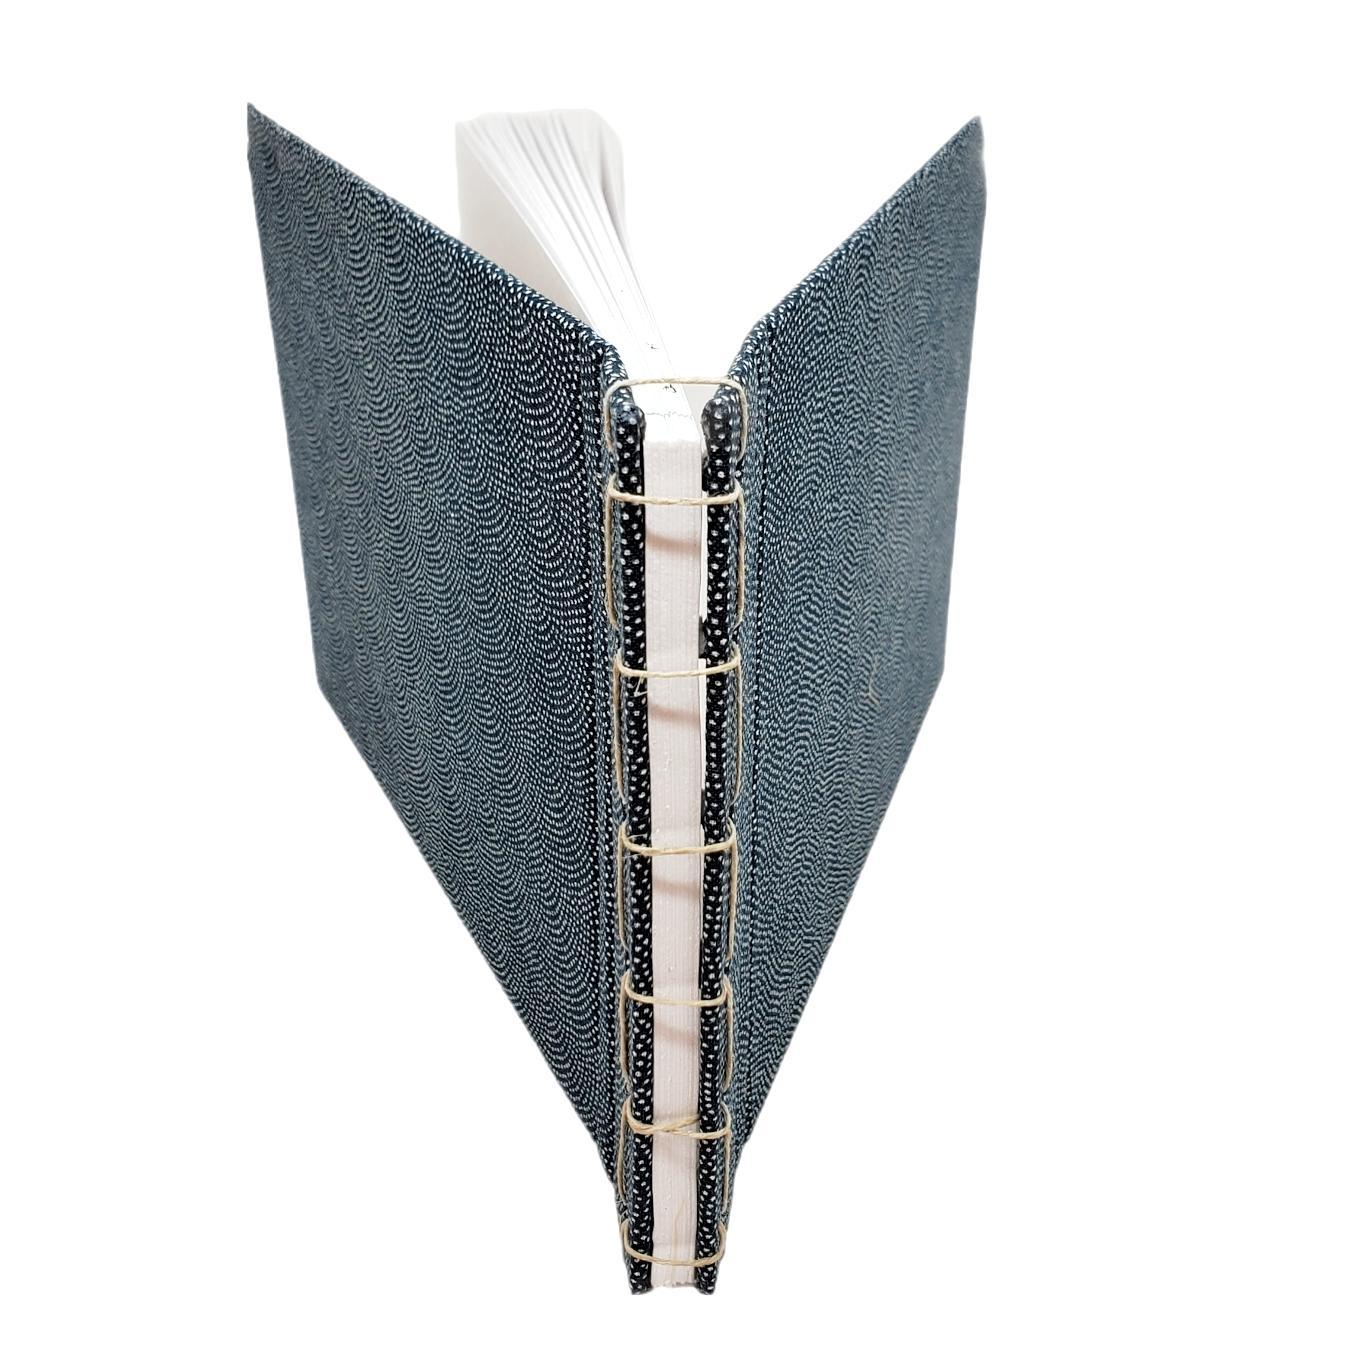 Journal - Clamshell Fabric Hand-bound Hardcover by Studio Artisaan - Bezel  & Kiln